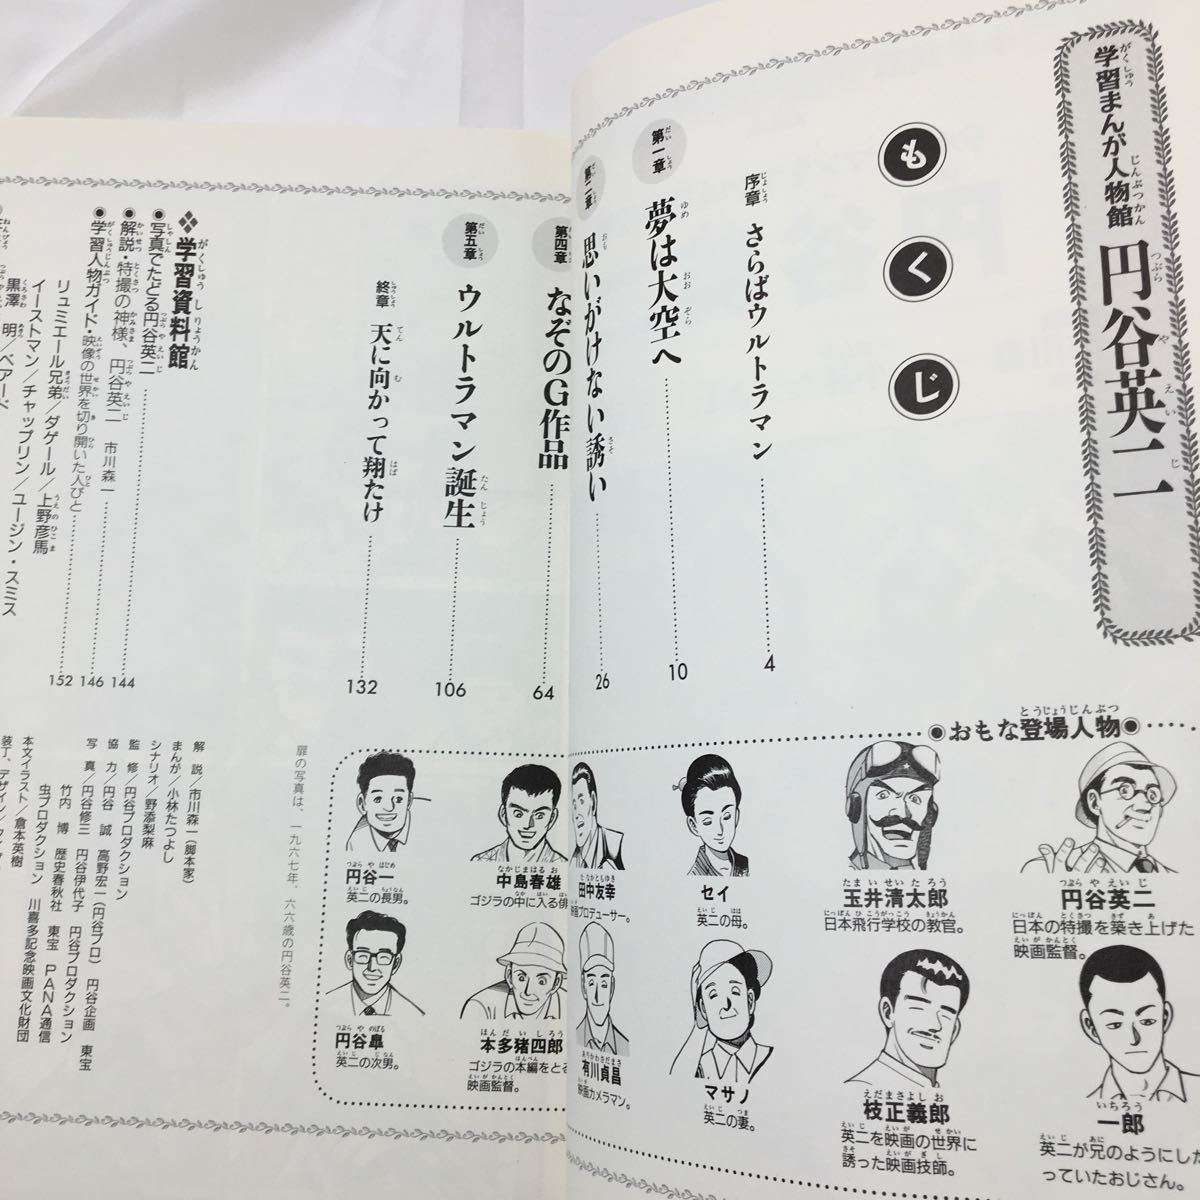 zaa-390* Shogakukan Inc. version study ... person pavilion jpy . britain two ( Shogakukan Inc. version study ... person pavilion ) Kobayashi ...... pear flax ( Japanese ) separate volume 1996/9/13